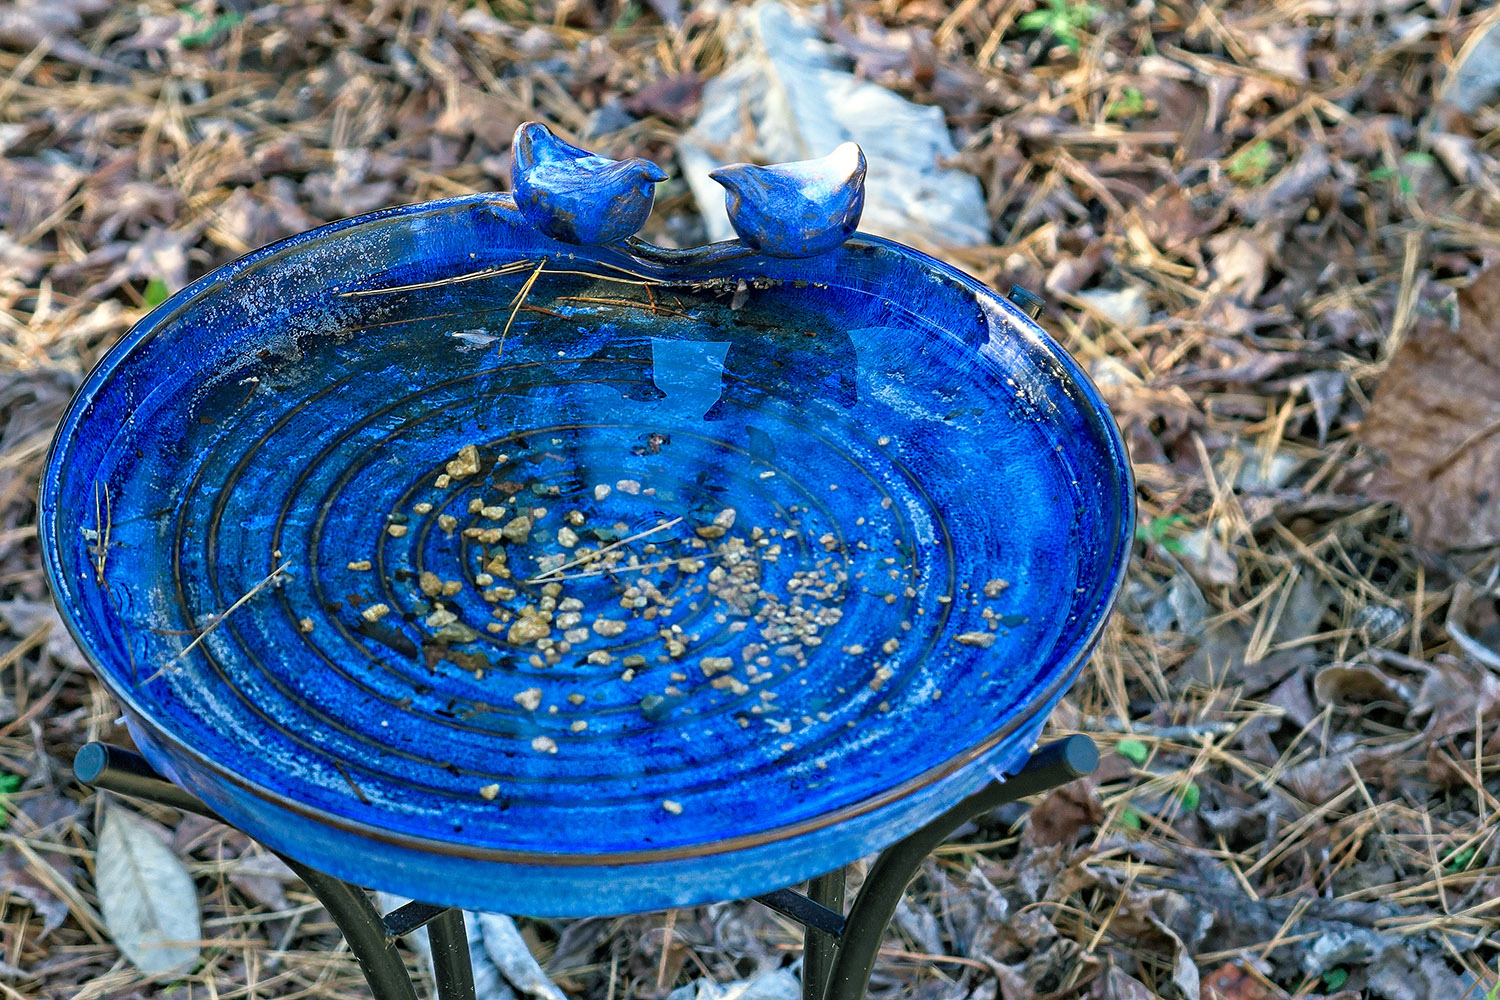 Bathing Bluebirds by Julie Berkowitz, Chapel Hill, NC (Clay, glaze, metal stand)